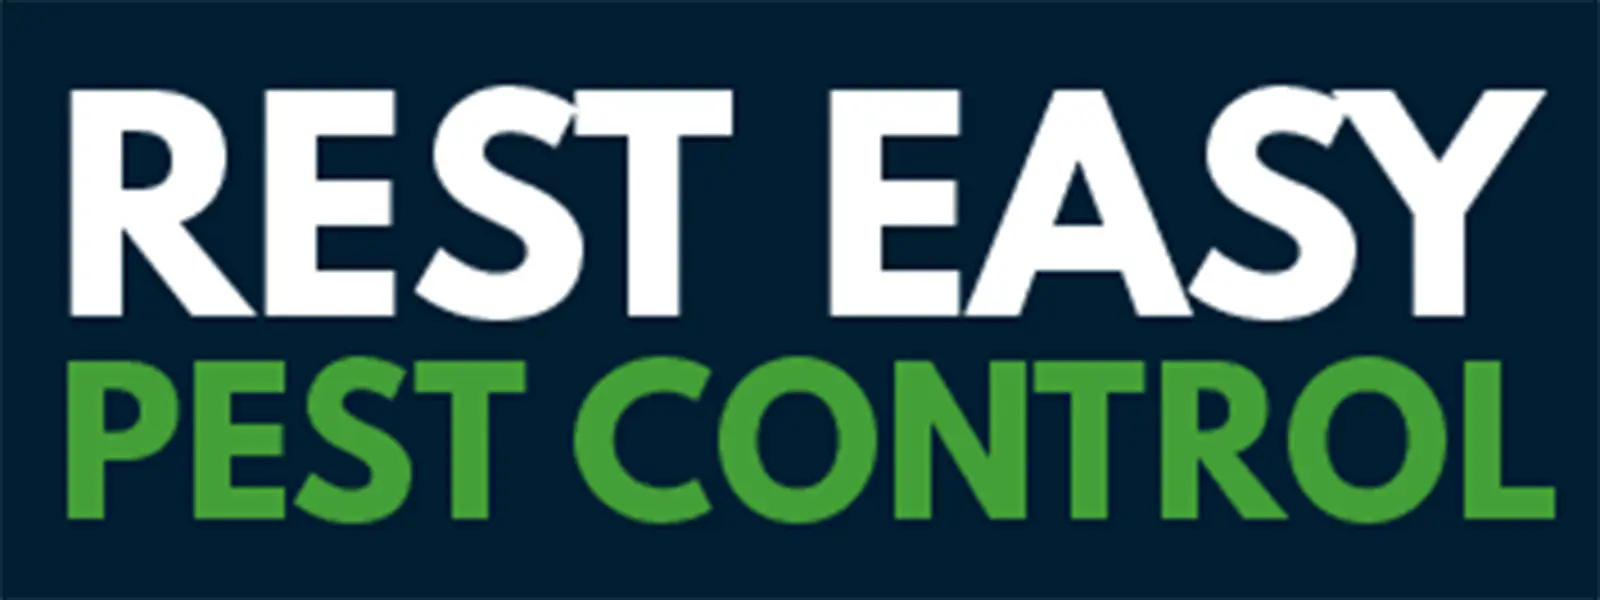 Rest Easy Pest Control Image Logo